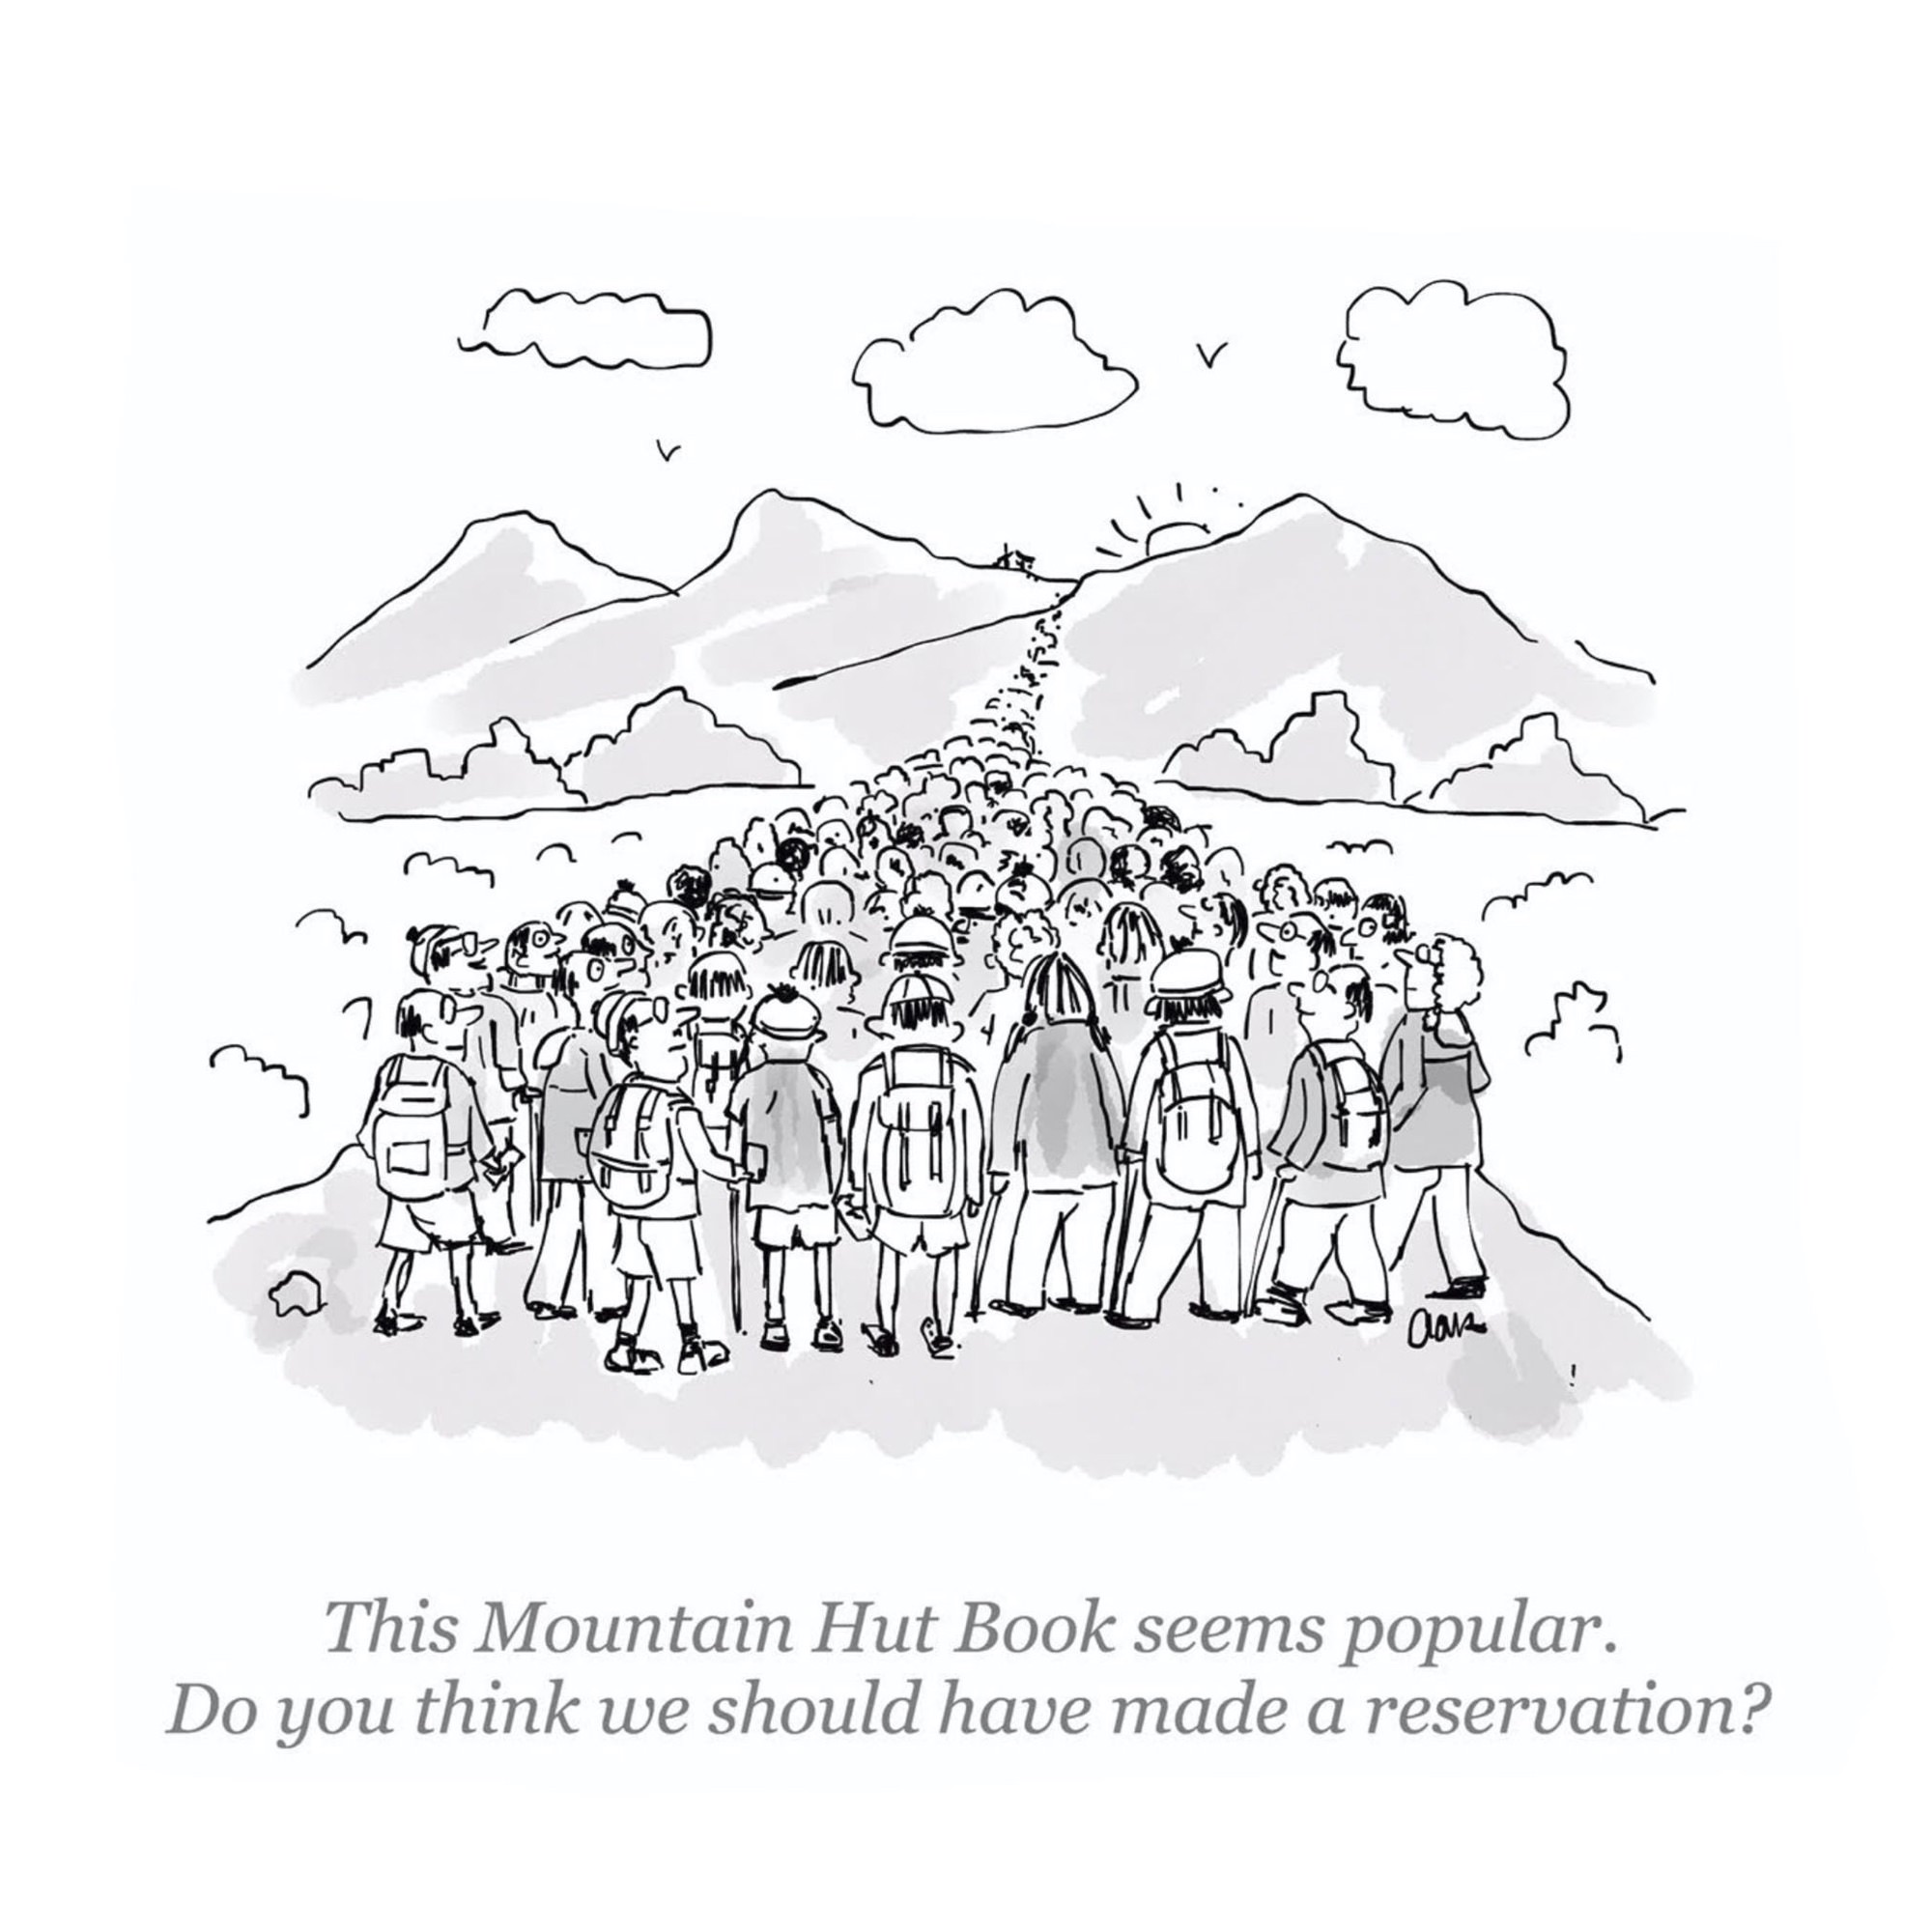 Mountain hut book cartoon